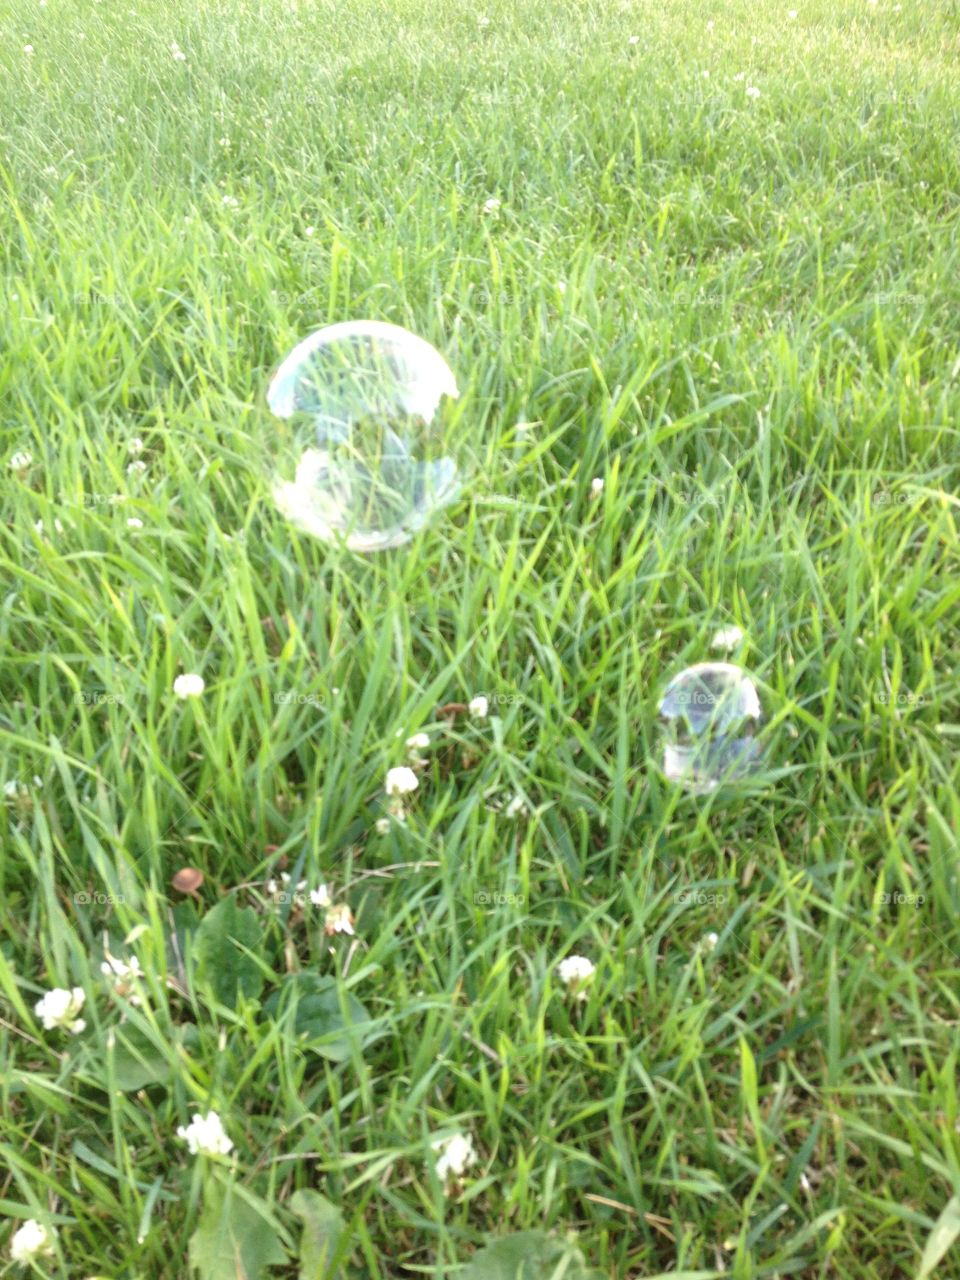 Summer bubble fun on the grass